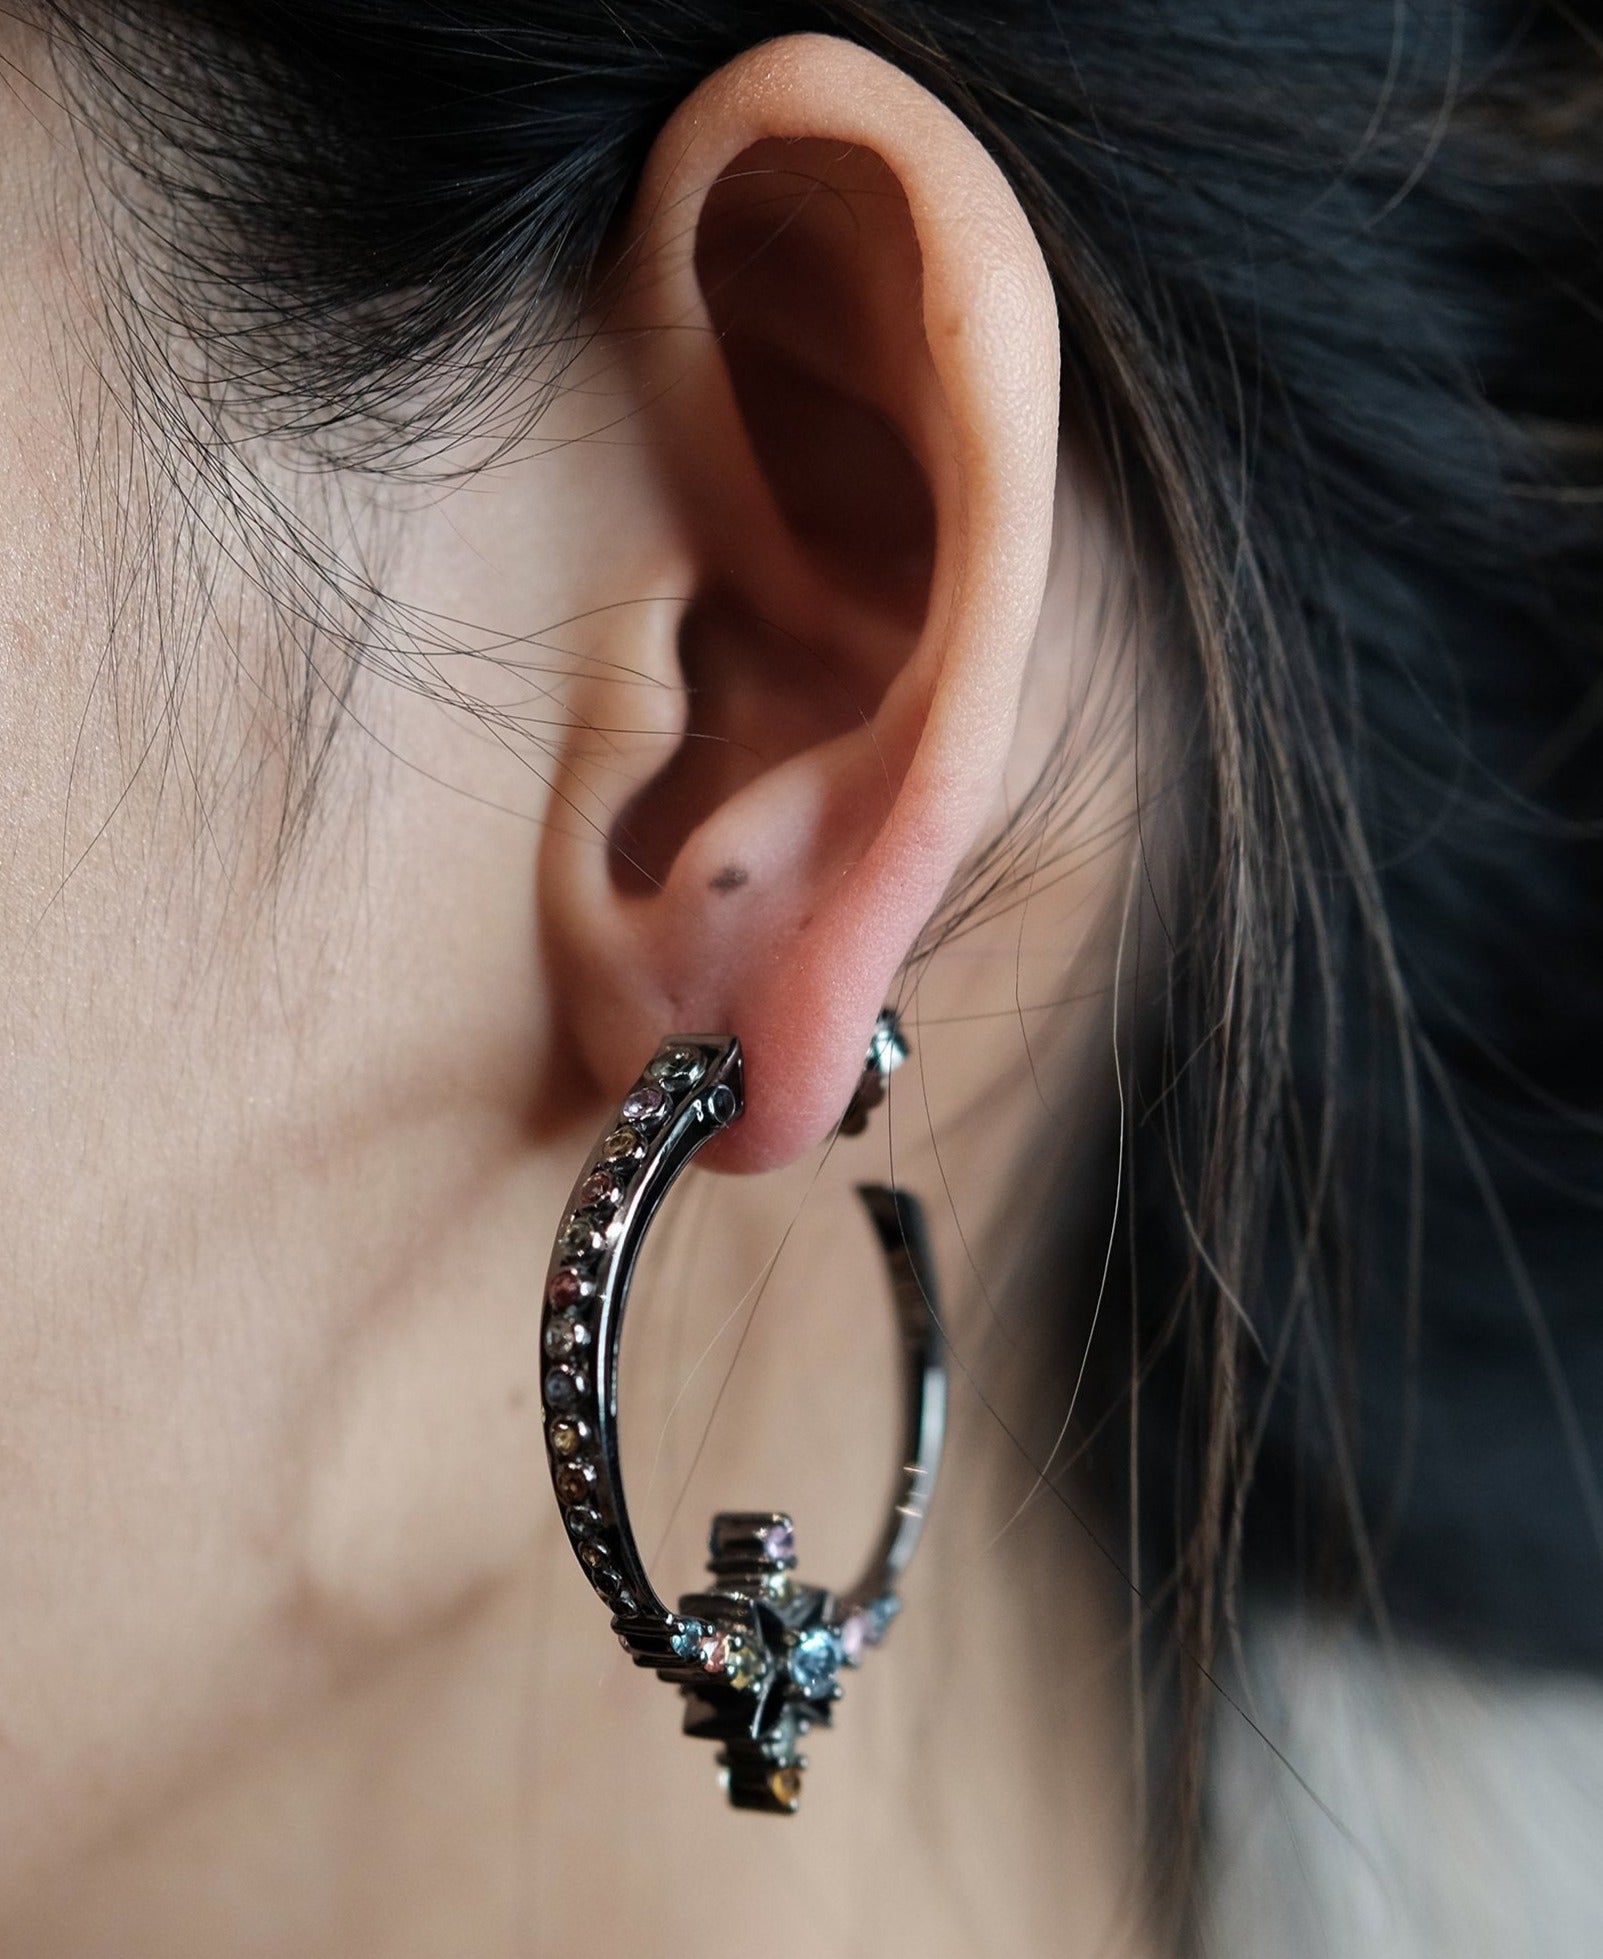 MCL Design star earrings